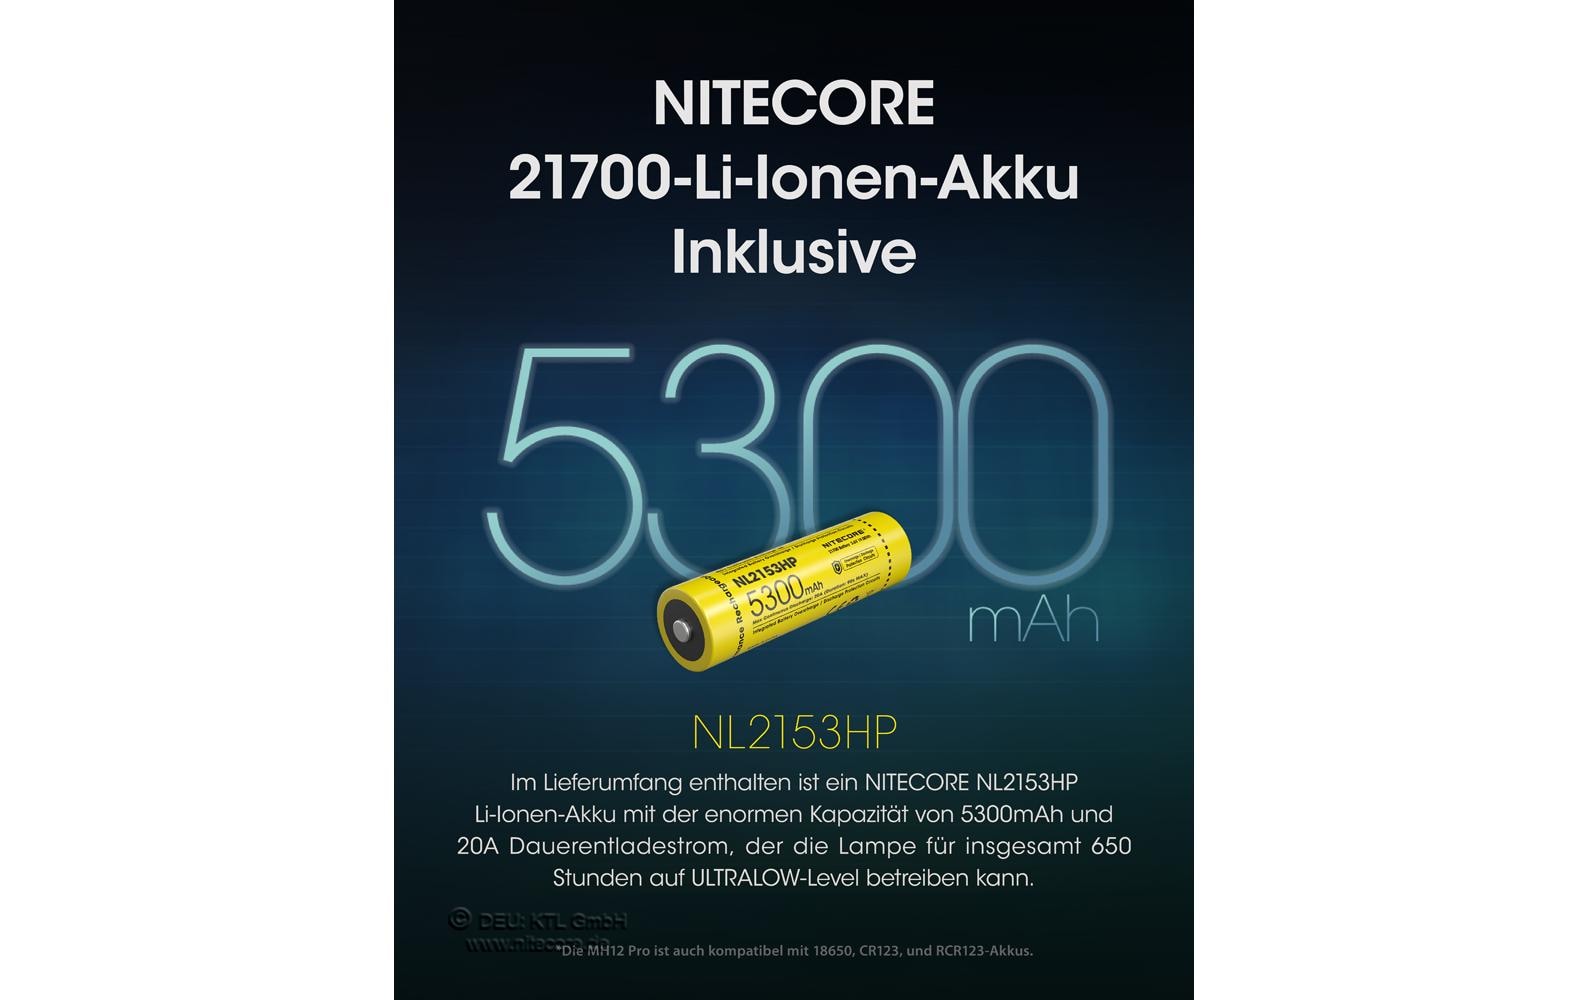 Nitecore Taschenlampe MH12 Pro 3300 lm